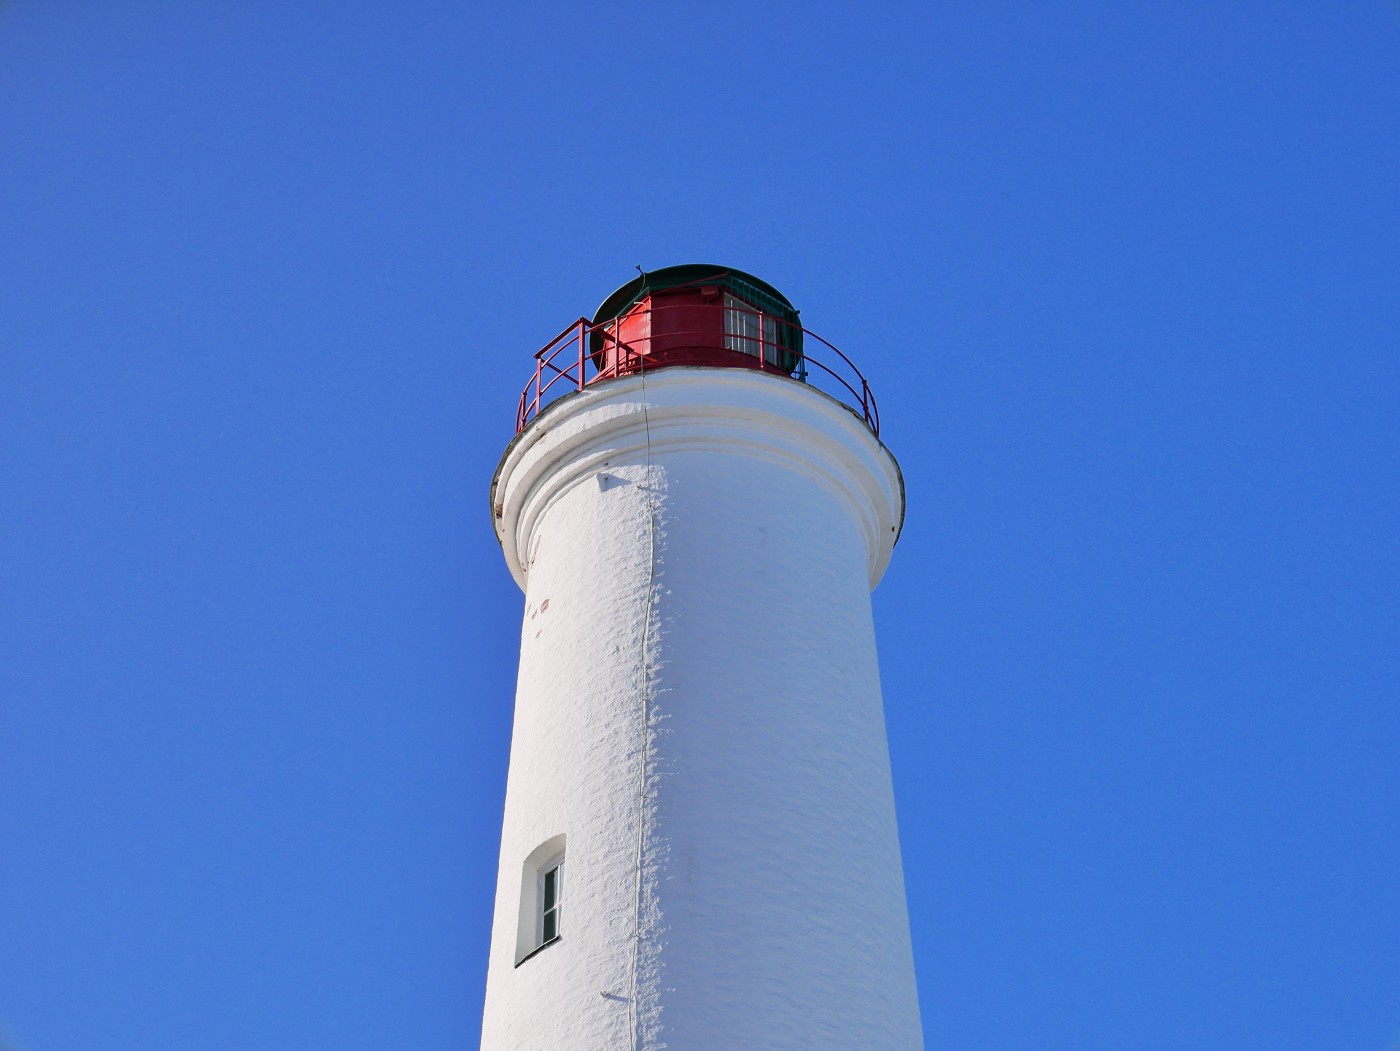 9 Marjaniemi majakka lighthouse closeup tower light